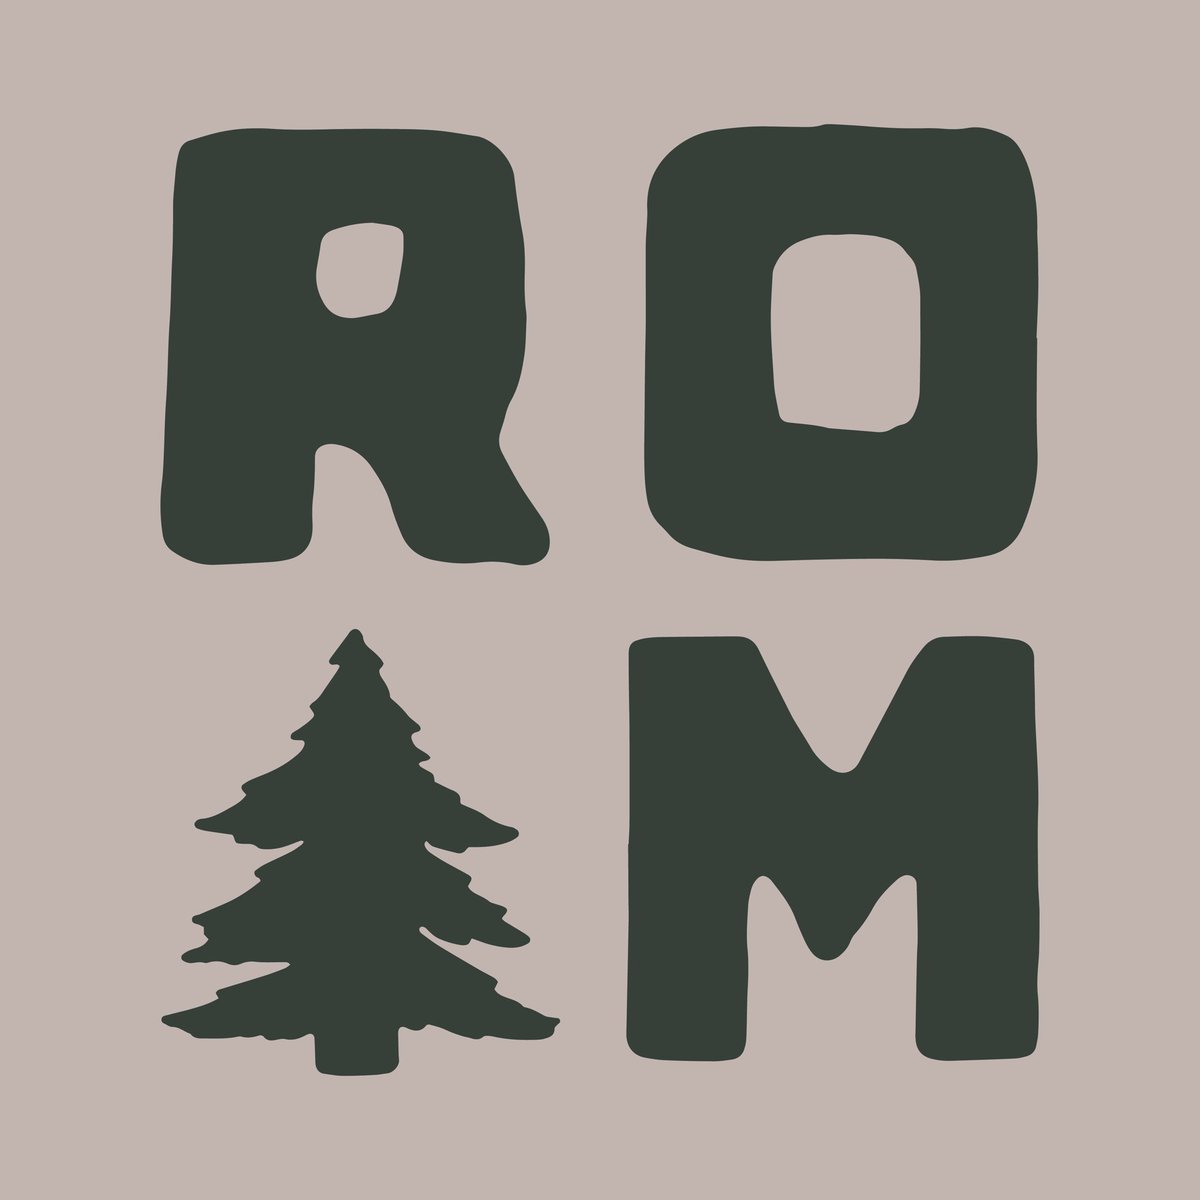 / ROAM /

On our way to adventure. 

#roam
#graphicdesign 
#roamer 
#hellooutdoors
#letsgosomewhere 
#designfeed
#art